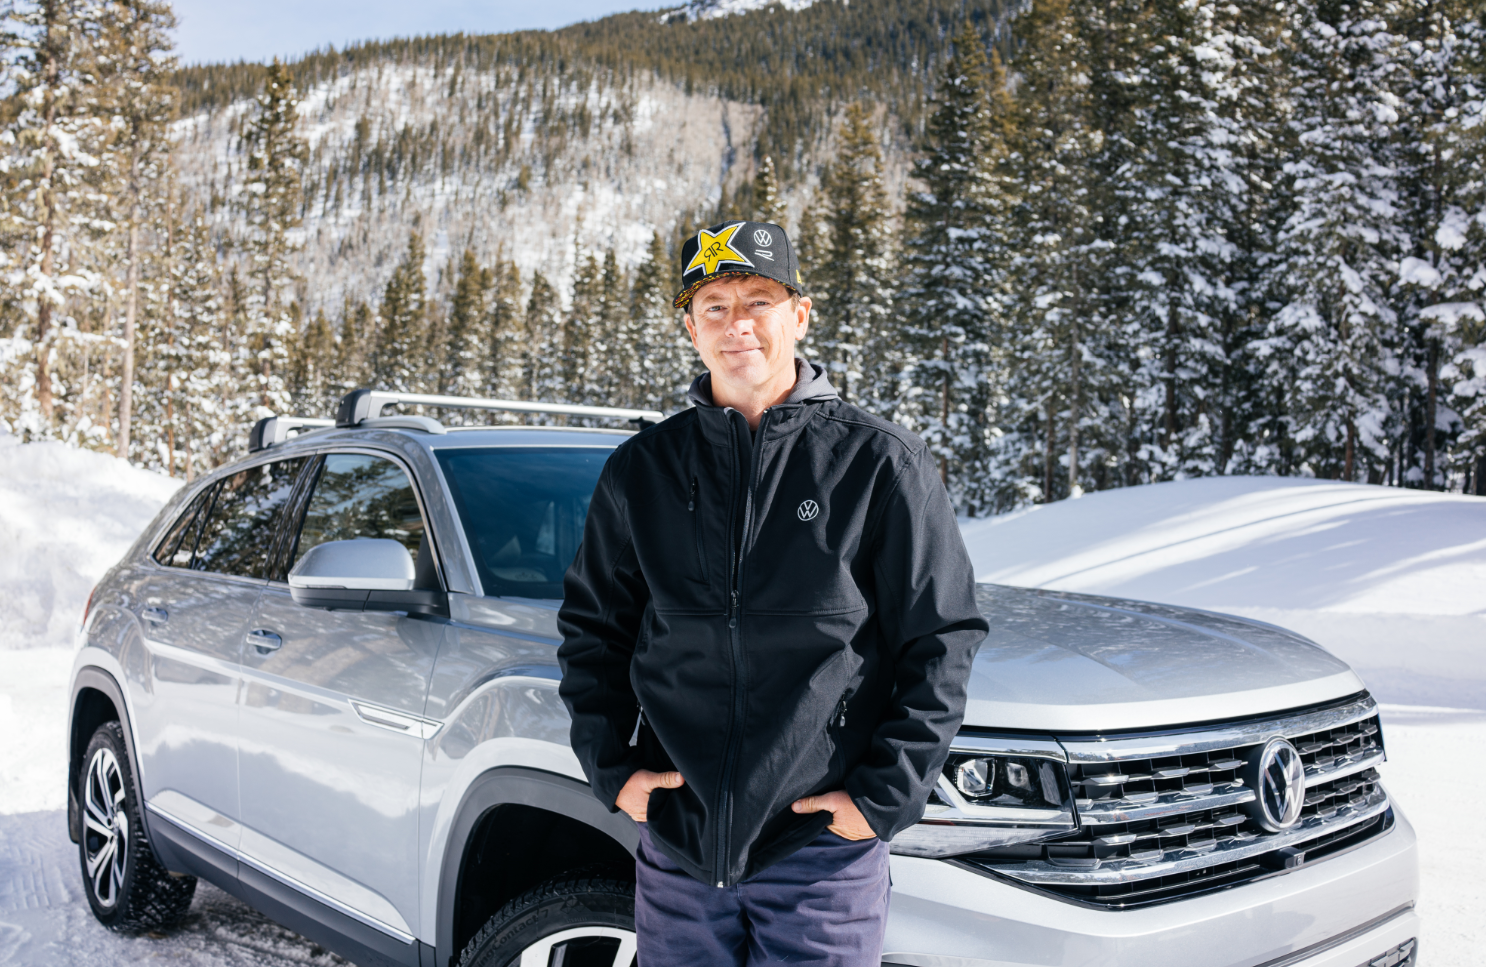 Winter Driving Tips from Rallycross Champ Tanner Foust